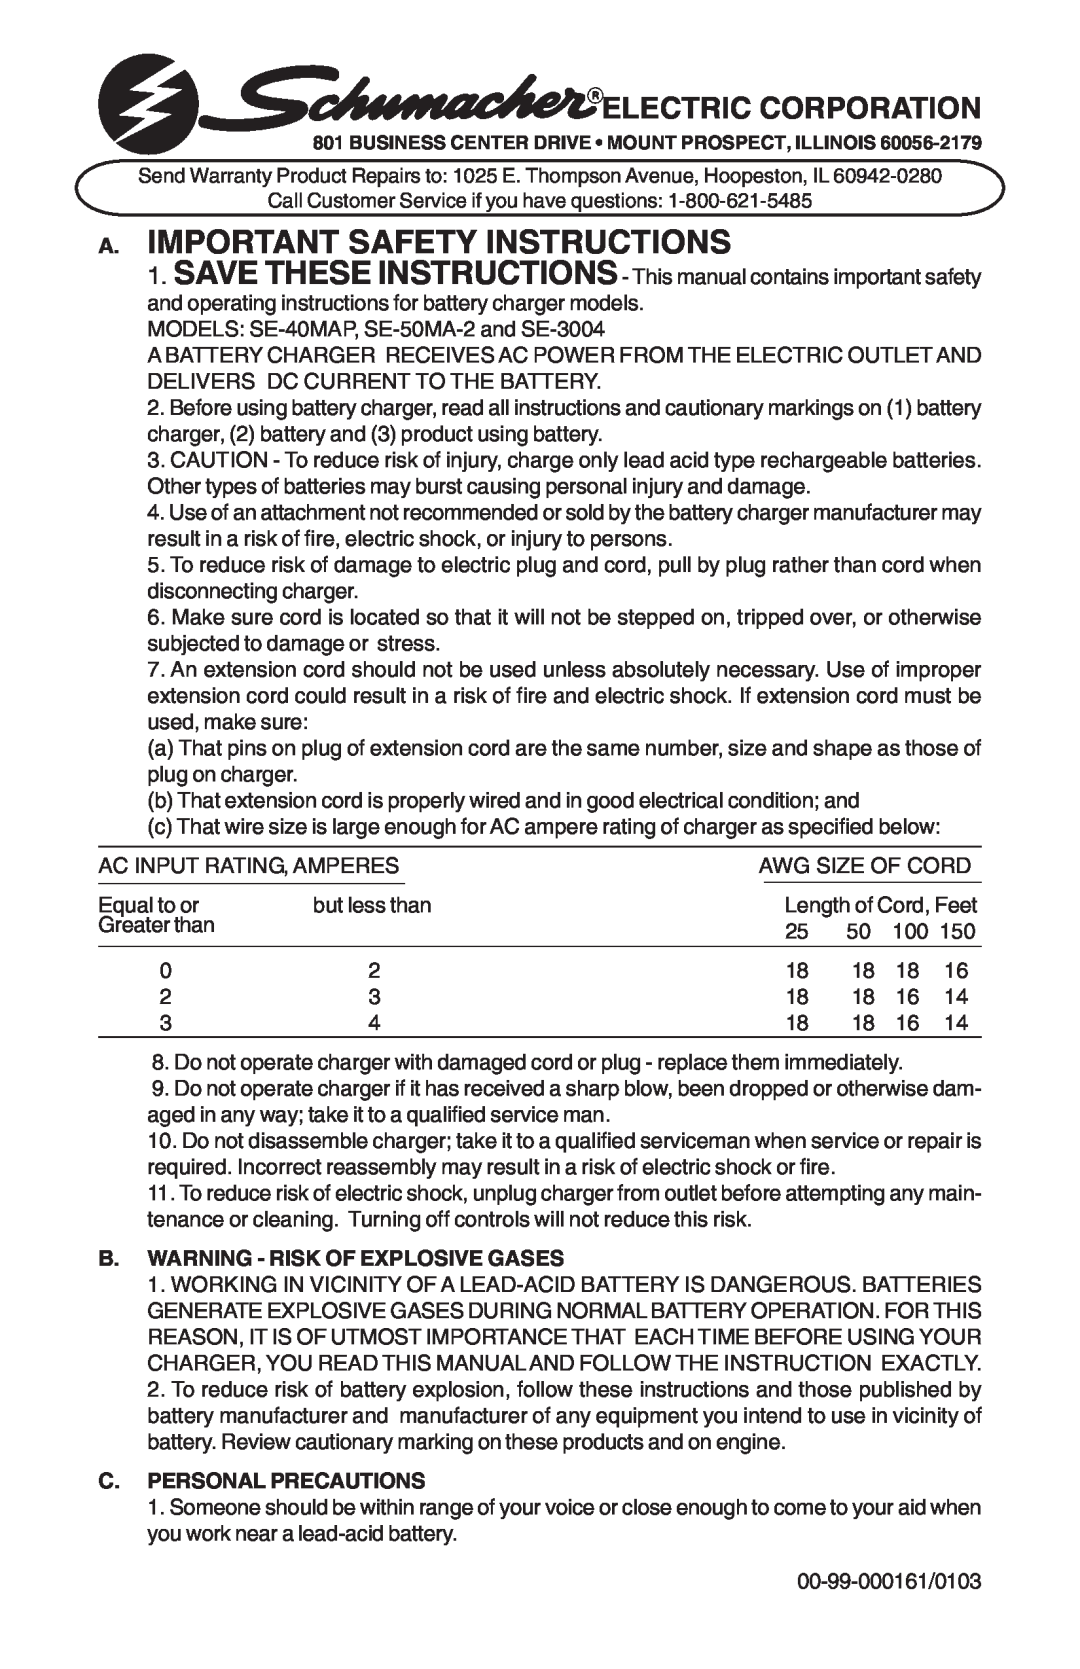 Schumacher SE-3004 important safety instructions A. Important Safety Instructions, B. Warning - Risk Of Explosive Gases 